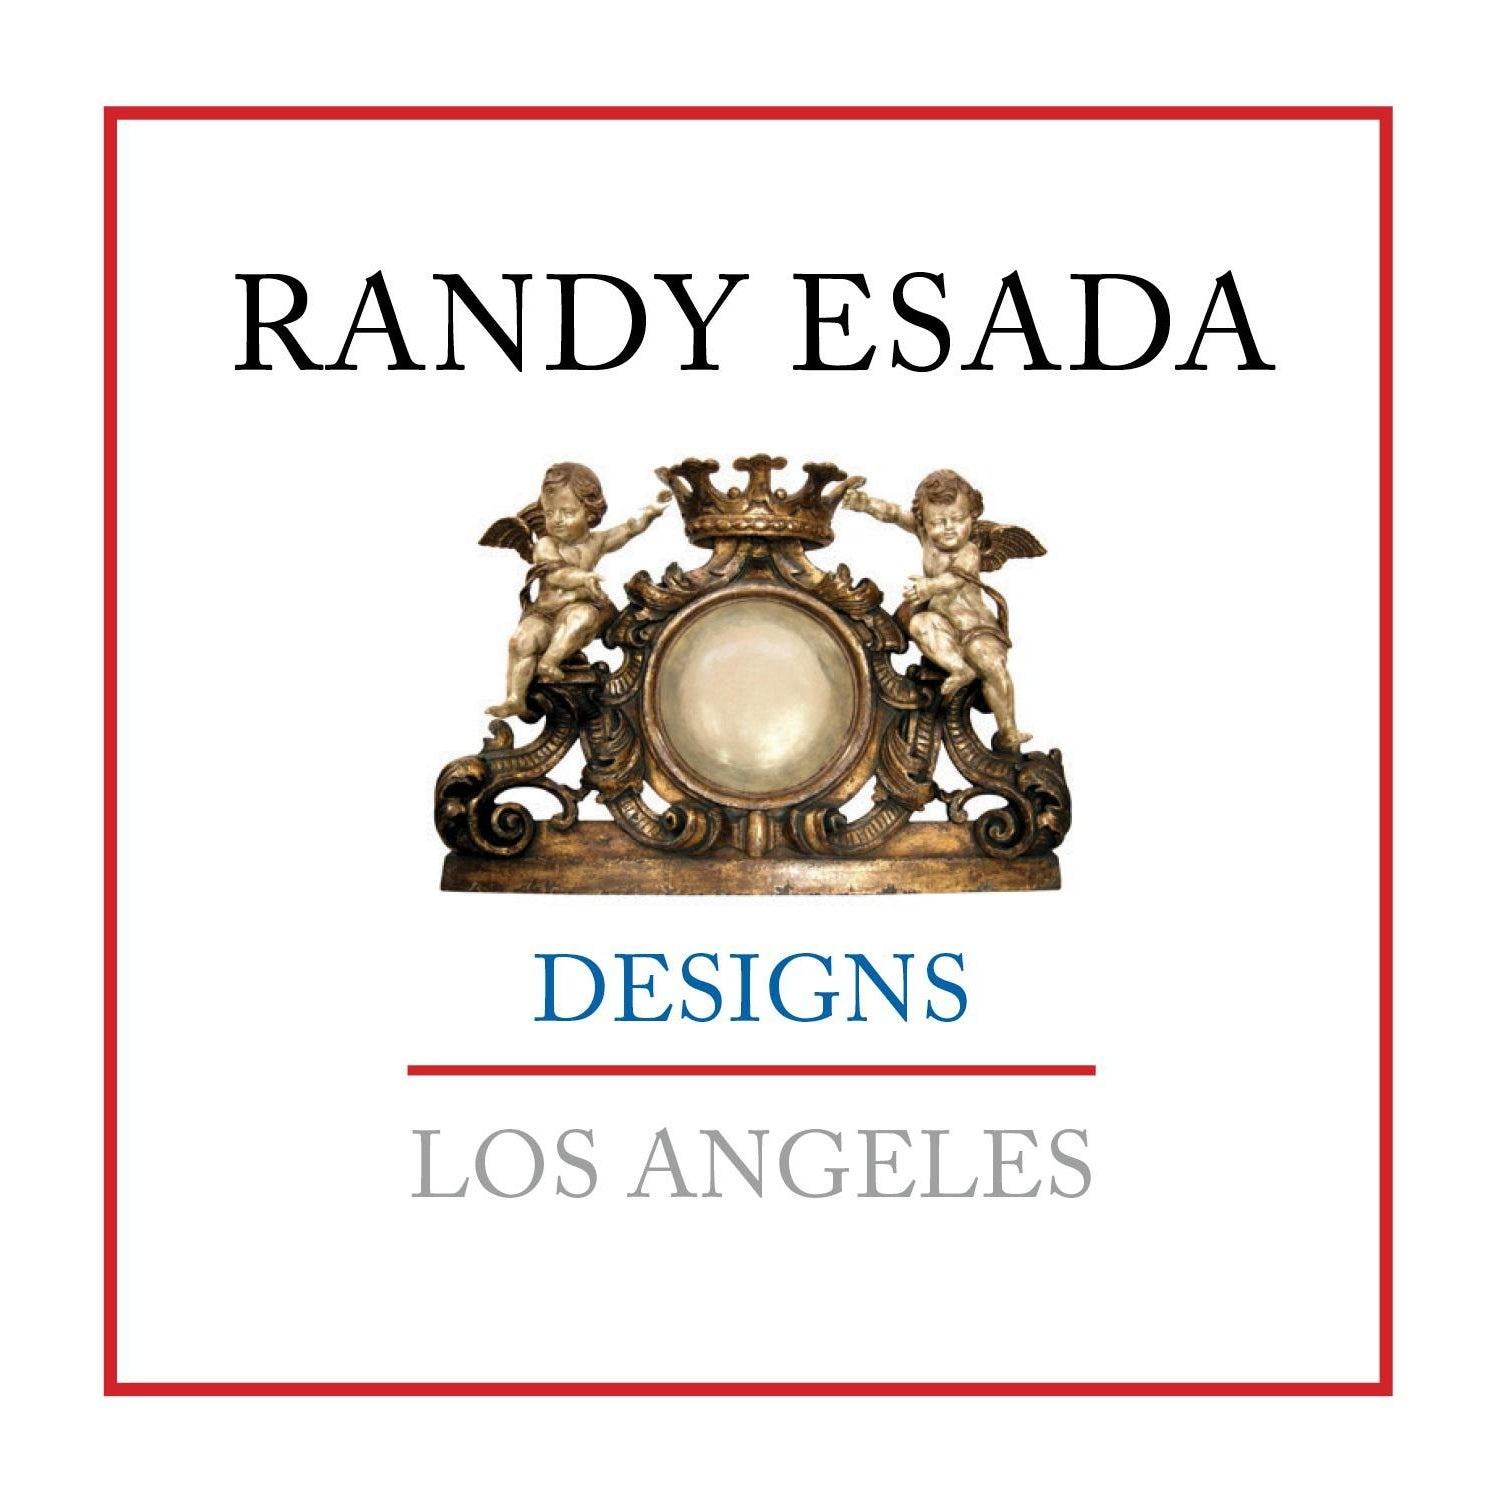 North American Elegant Carved Italian Napoli Designer Giltwood Mirror by Randy Esada Designs For Sale